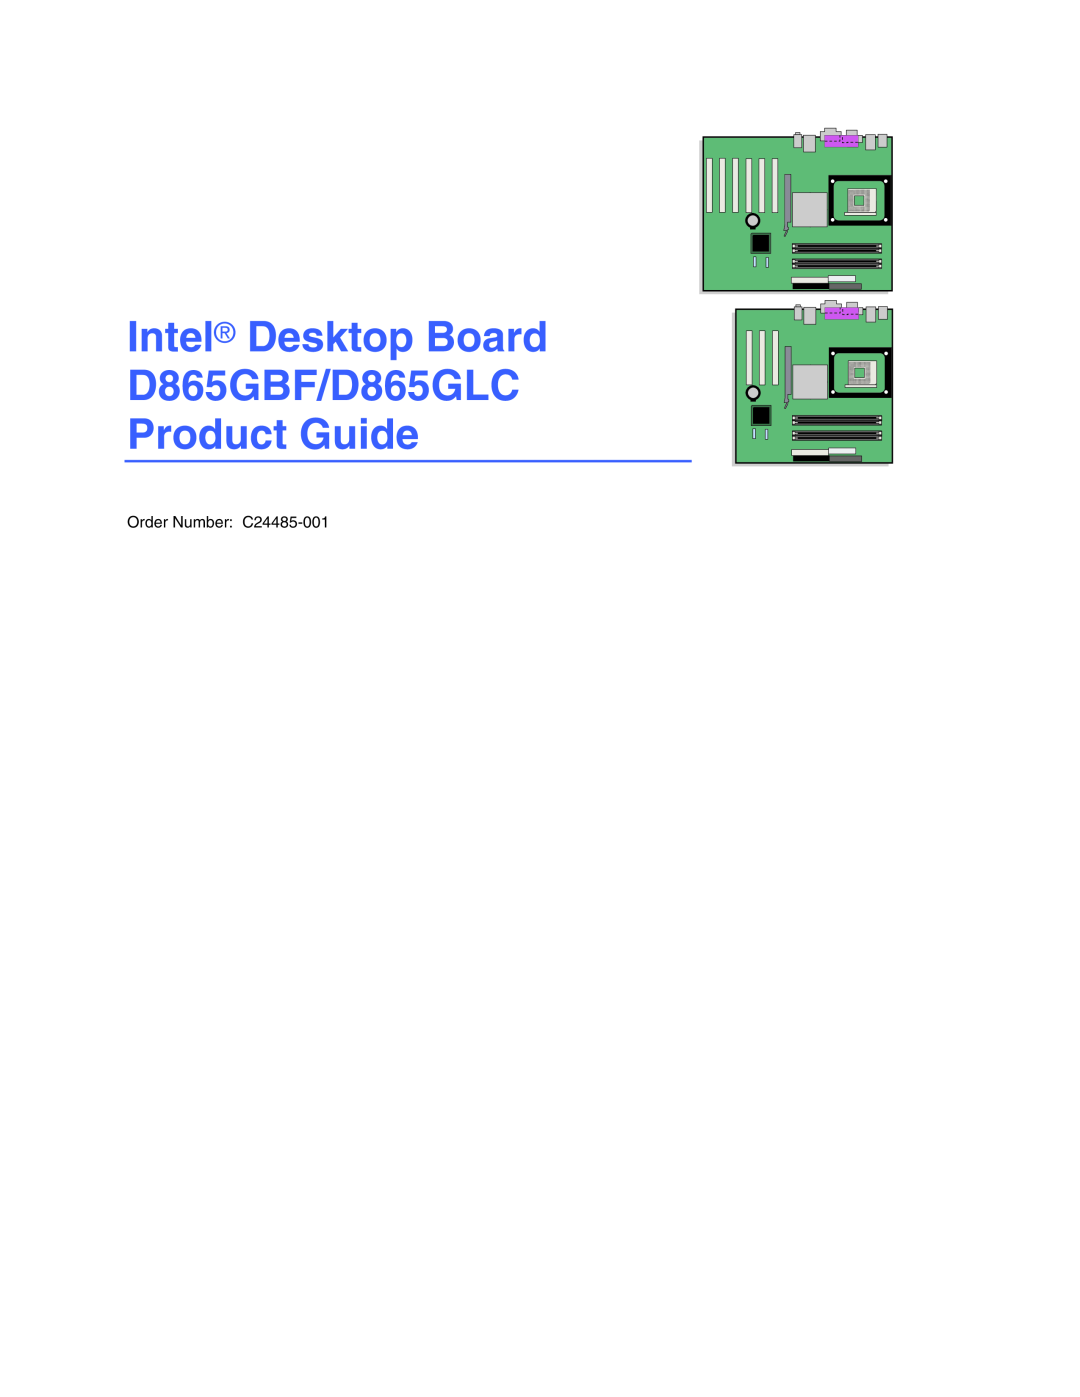 Intel manual Intel Desktop Board D865GBF/D865GLC Product Guide, Order Number C24485-001 